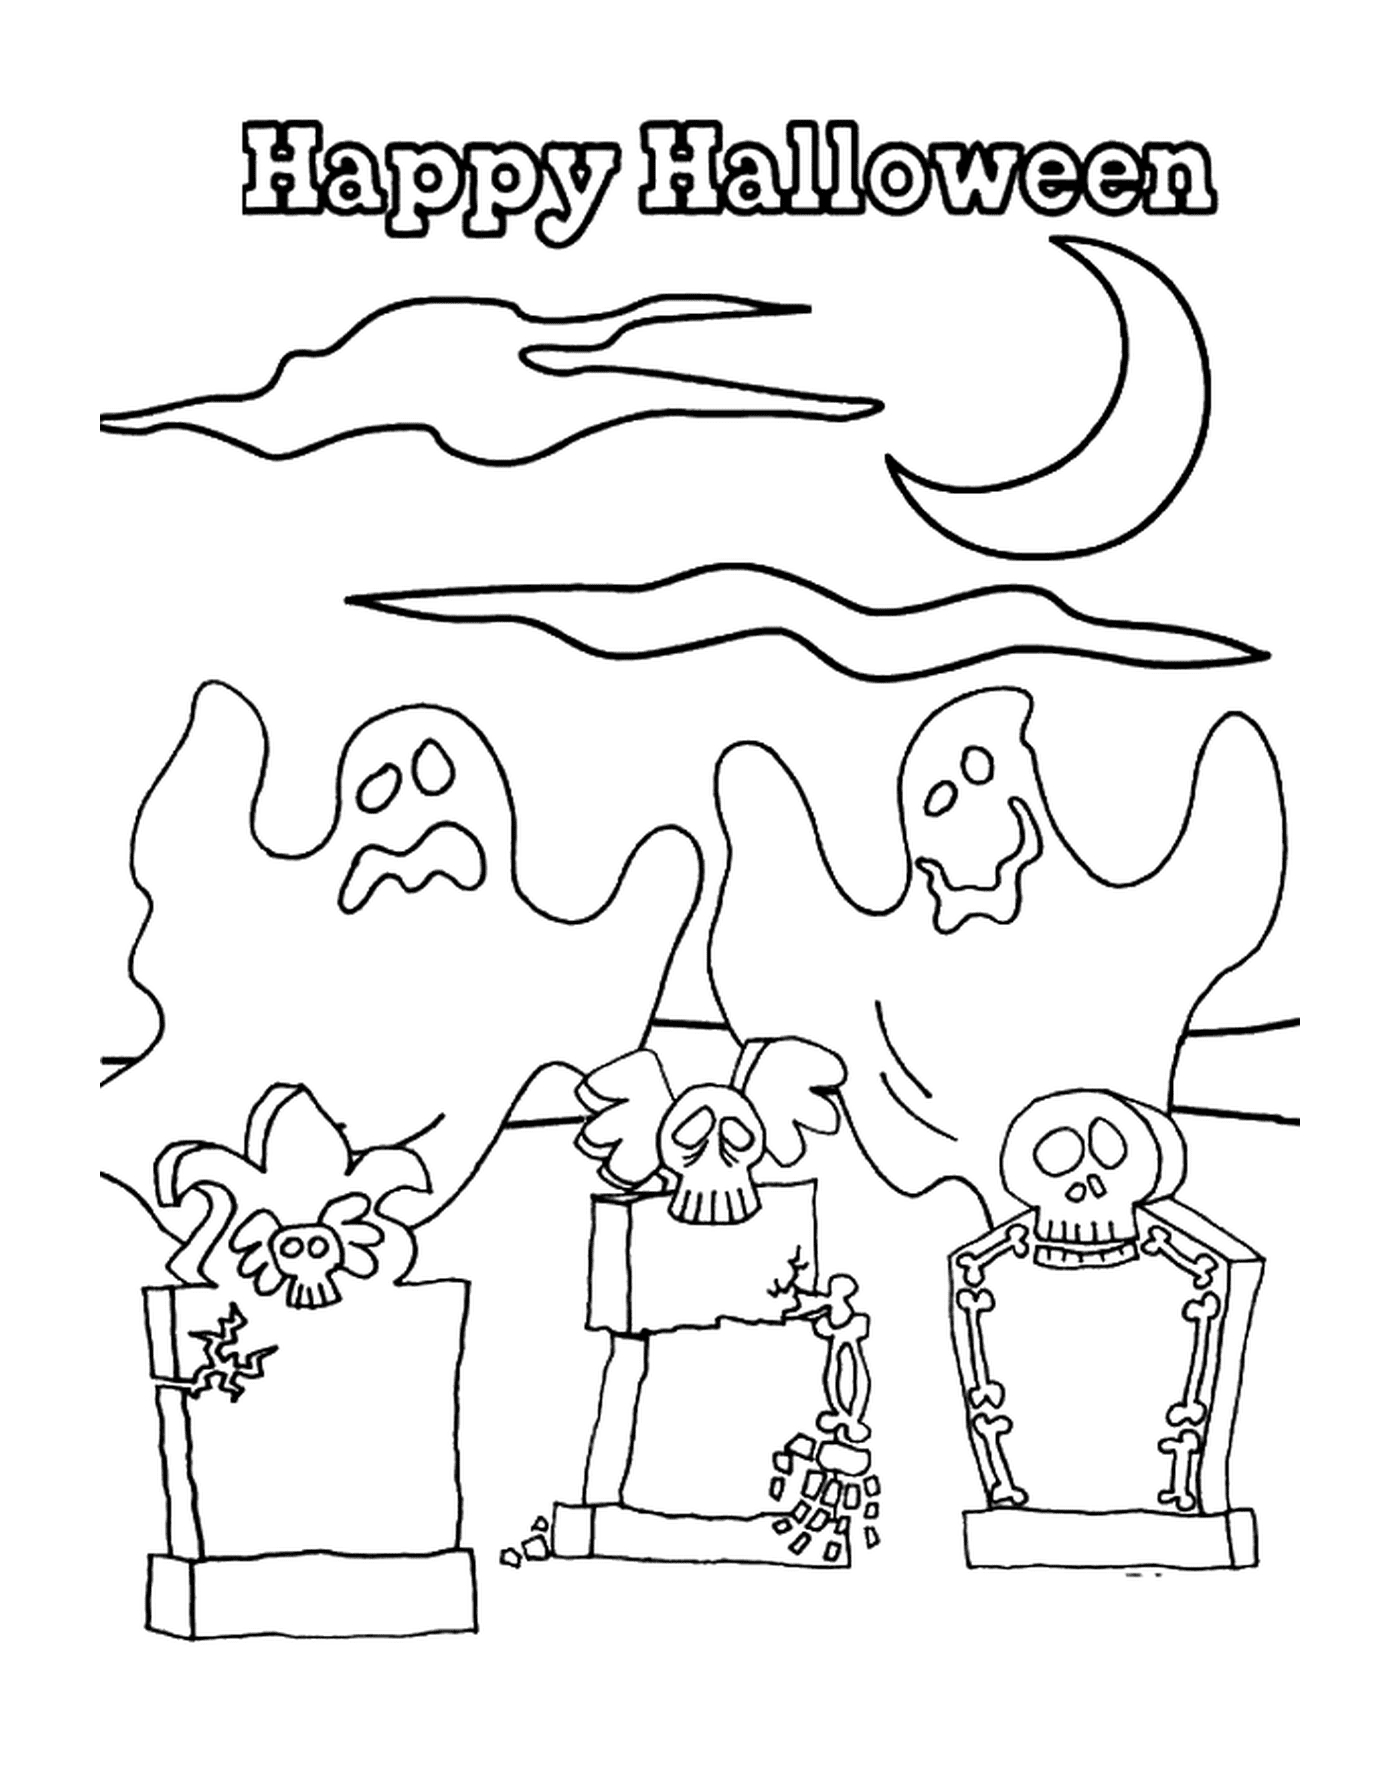 happy halloween avec des fantomes